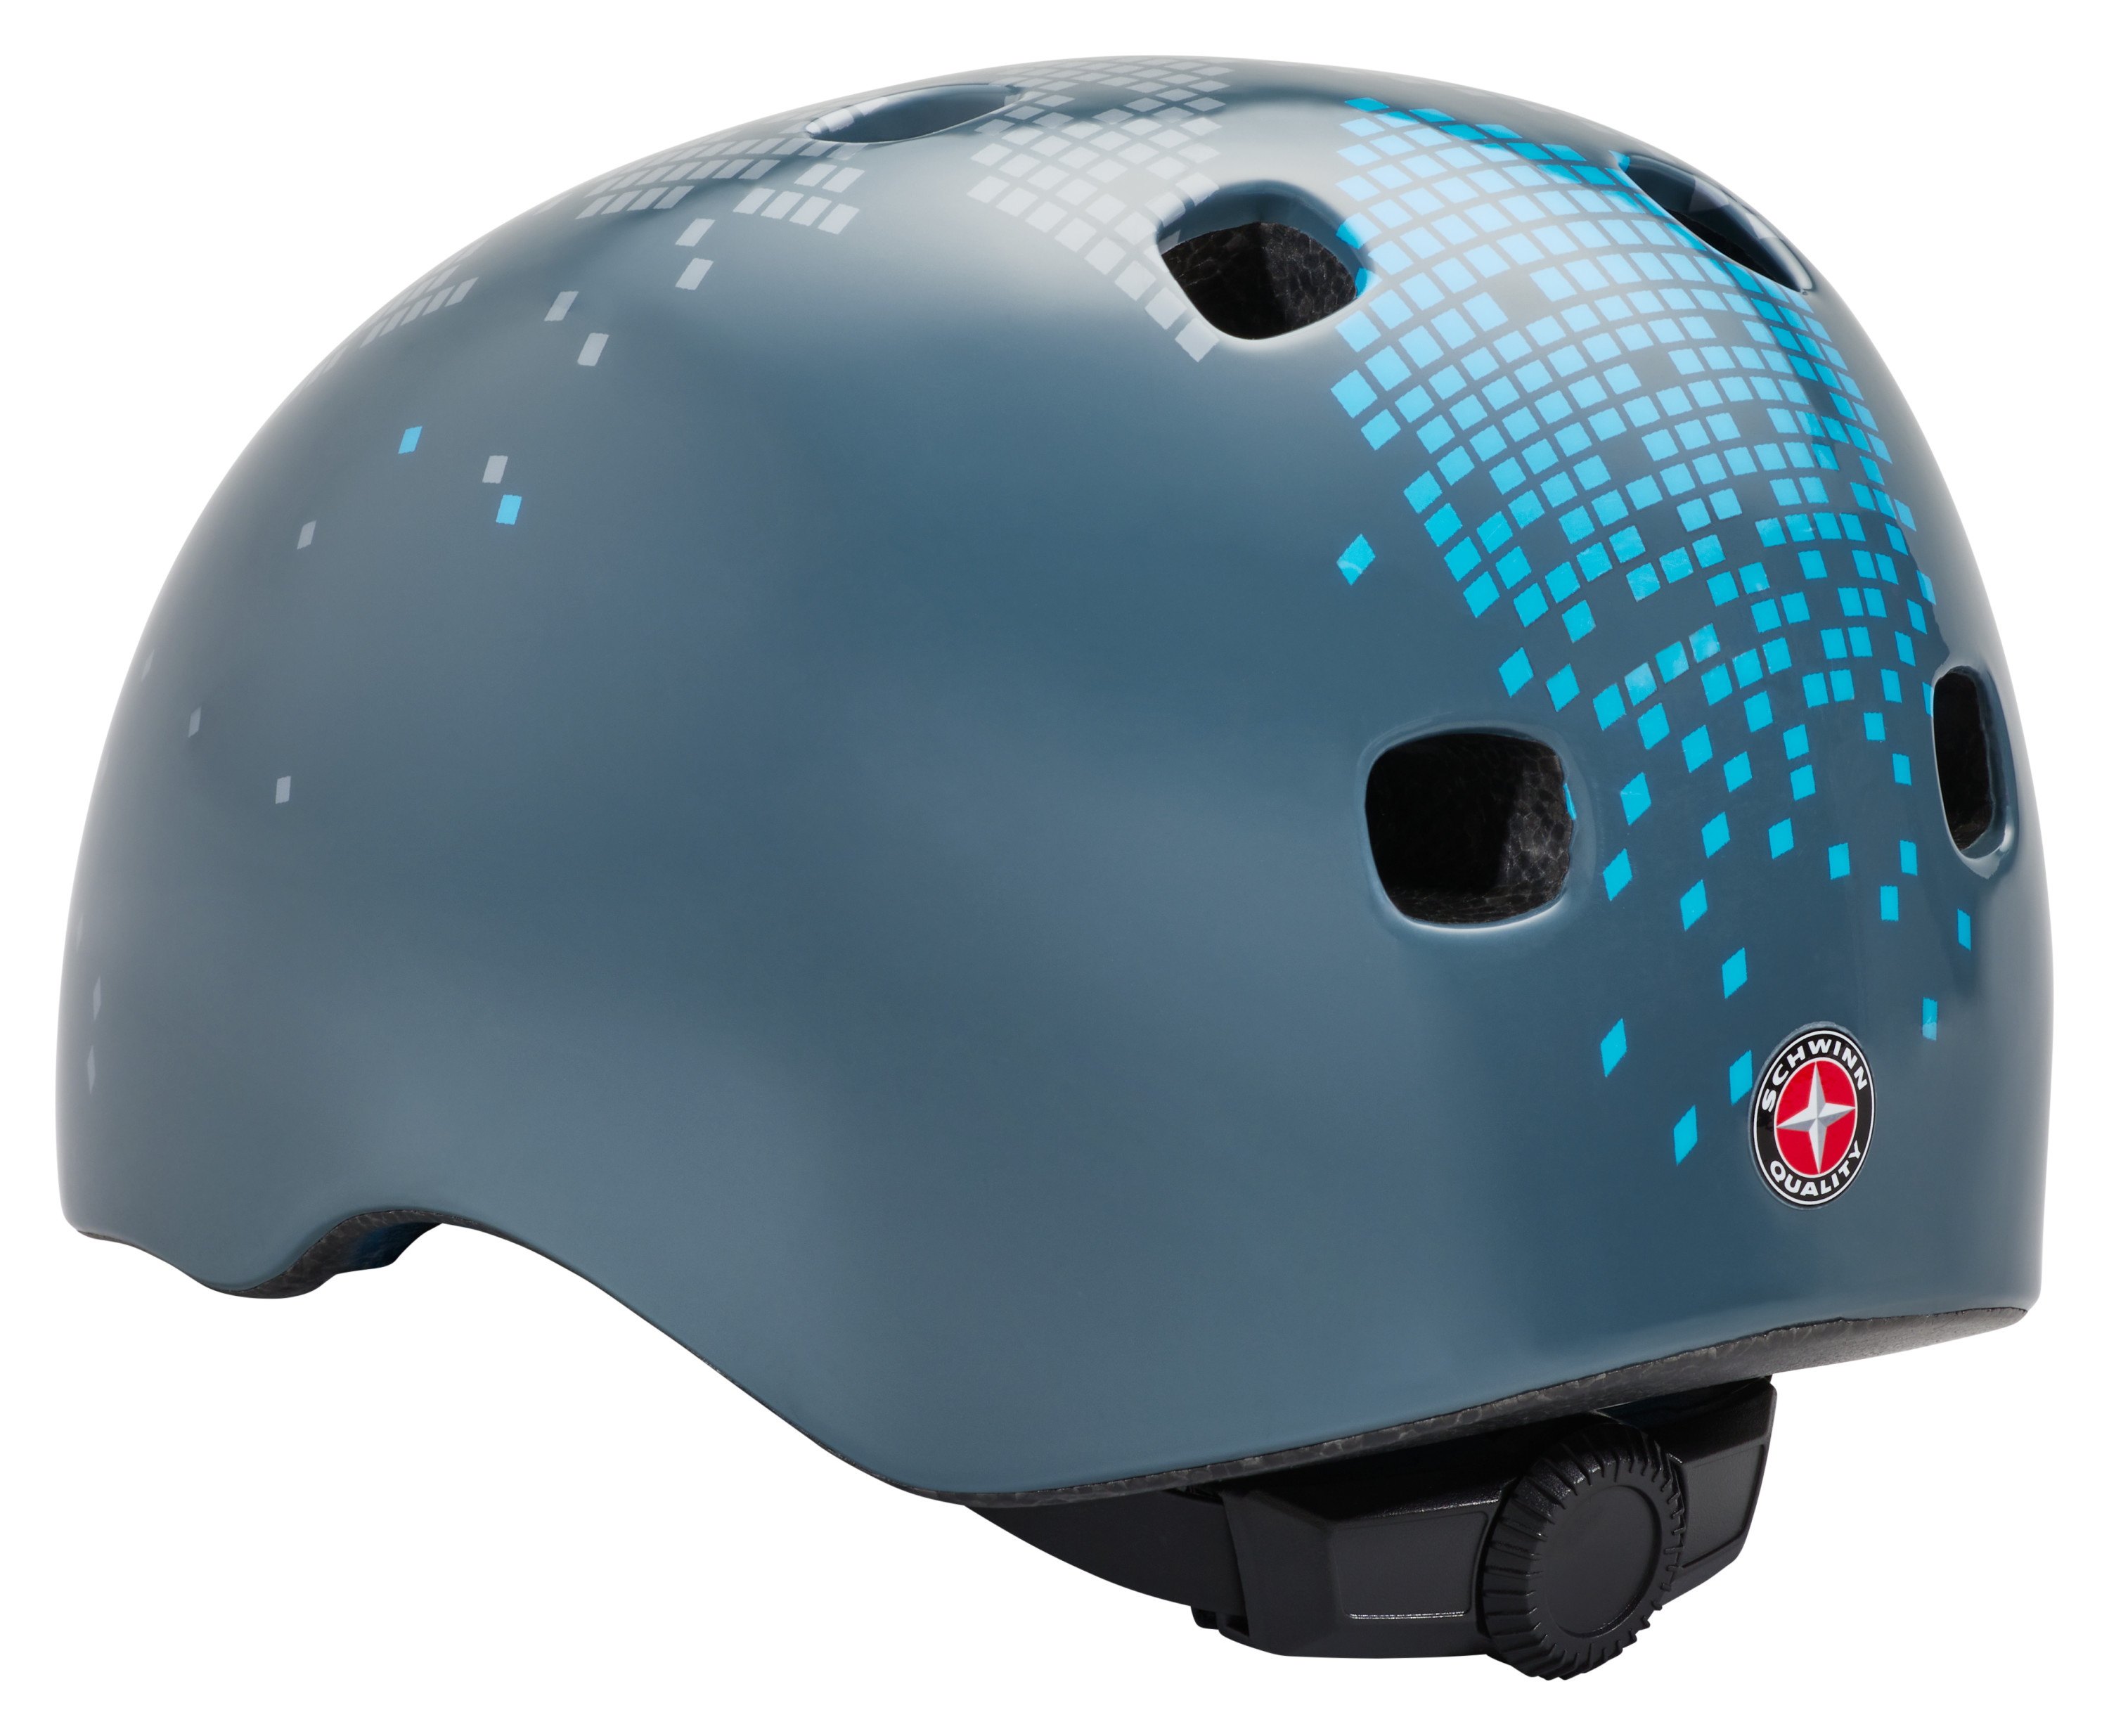 Schwinn Burst Youth Multisport Helmet, Grey - image 2 of 8